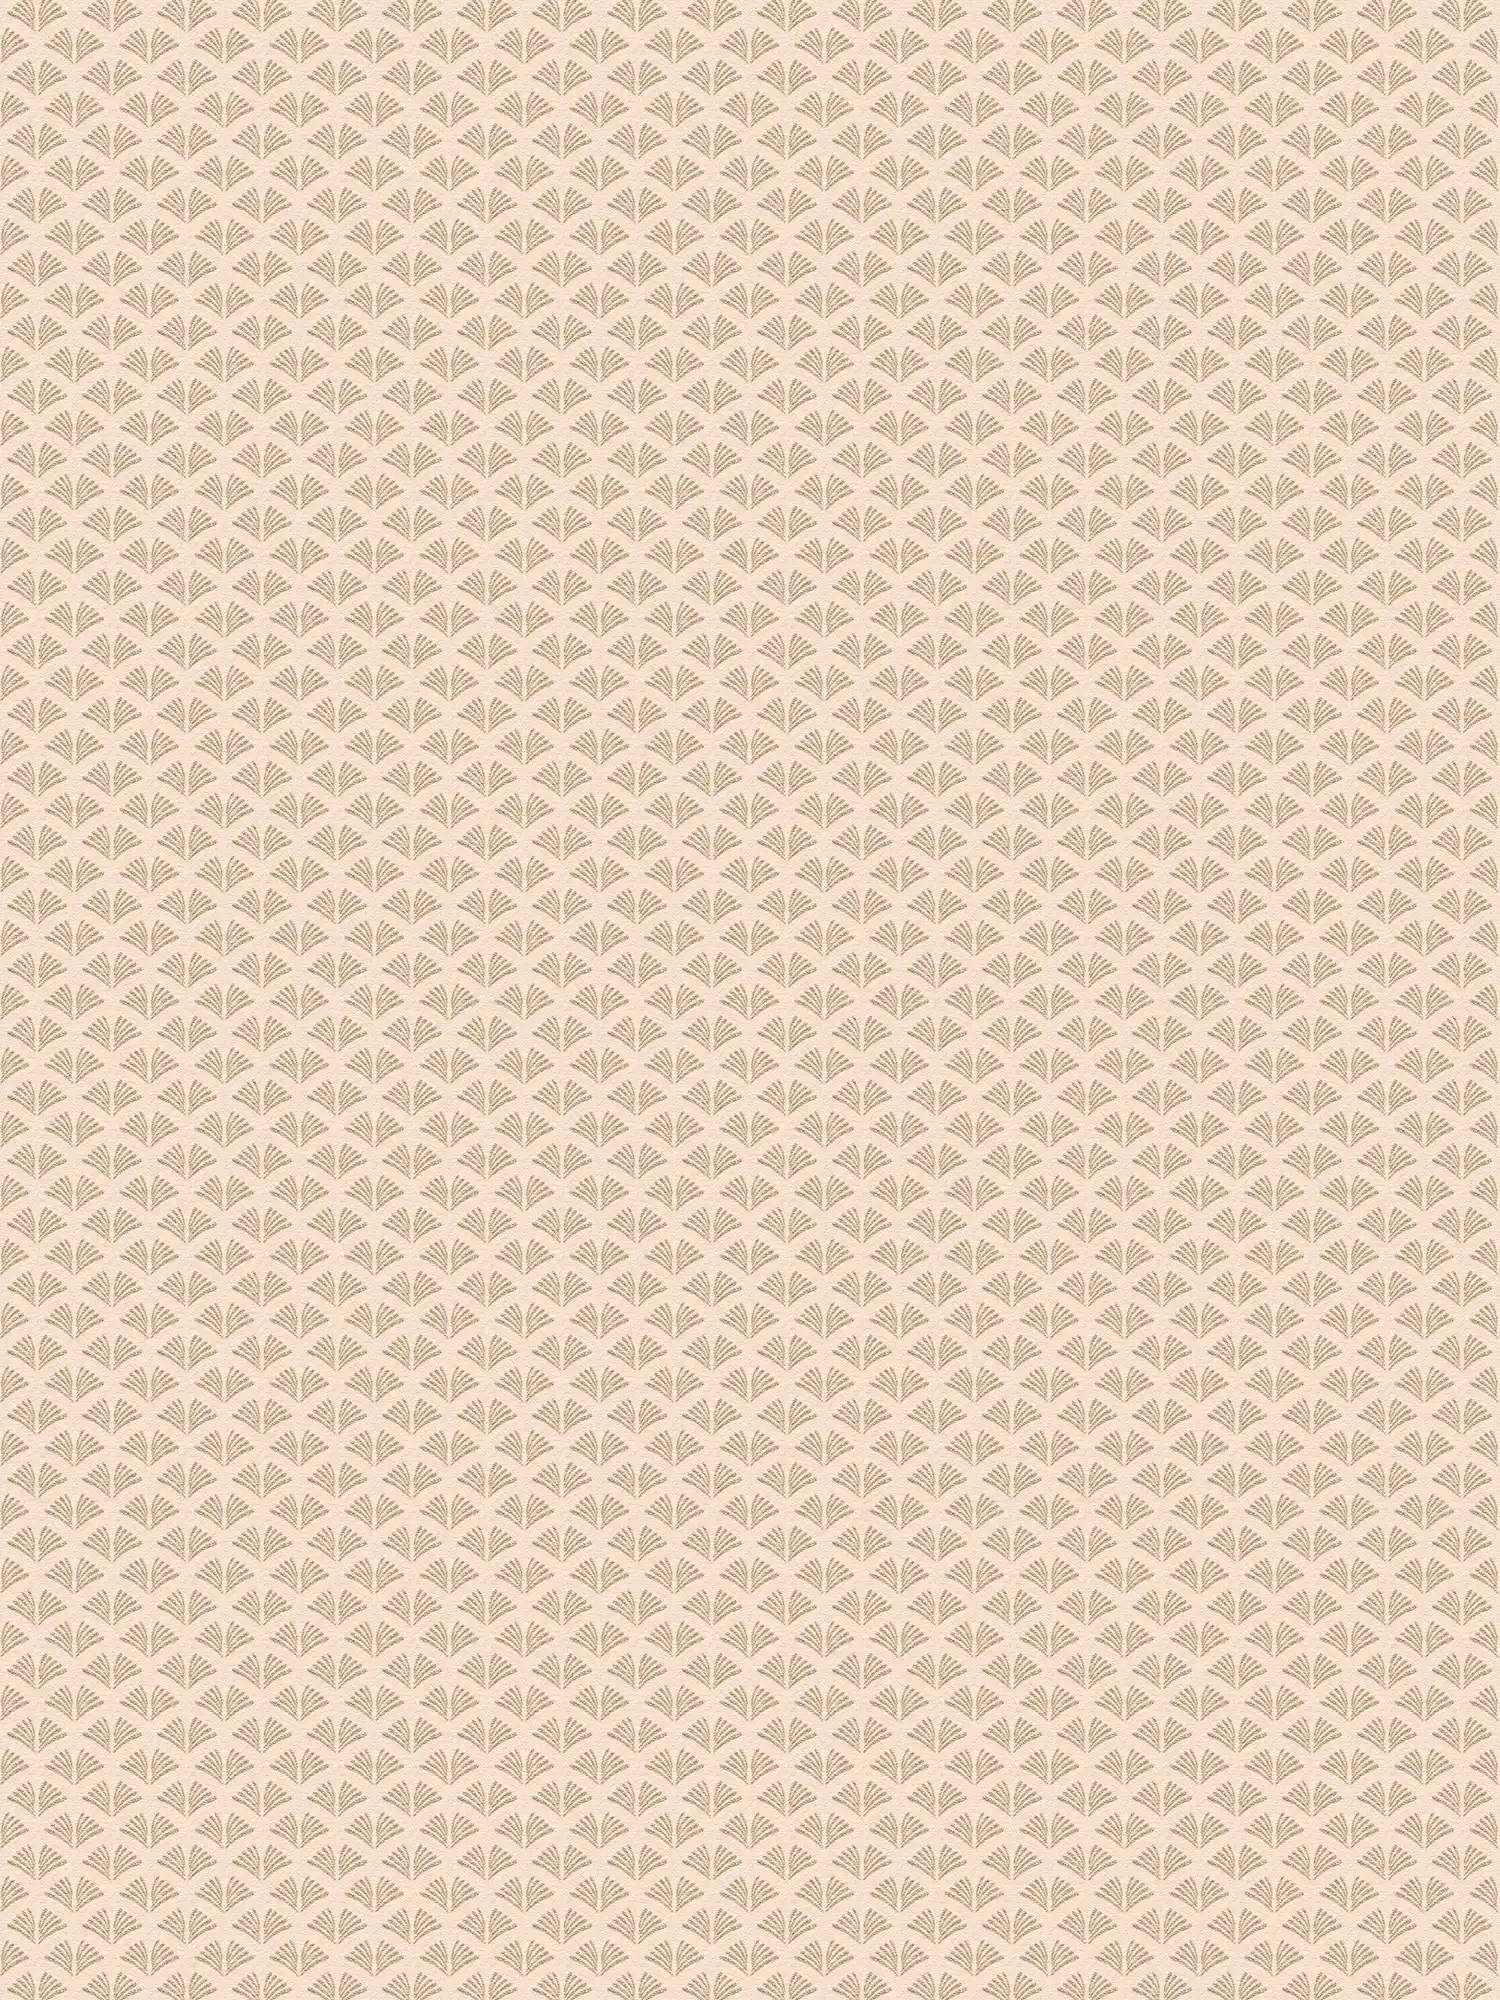 Pattern wallpaper with metallic design & texture effect - cream, metallic, pink
